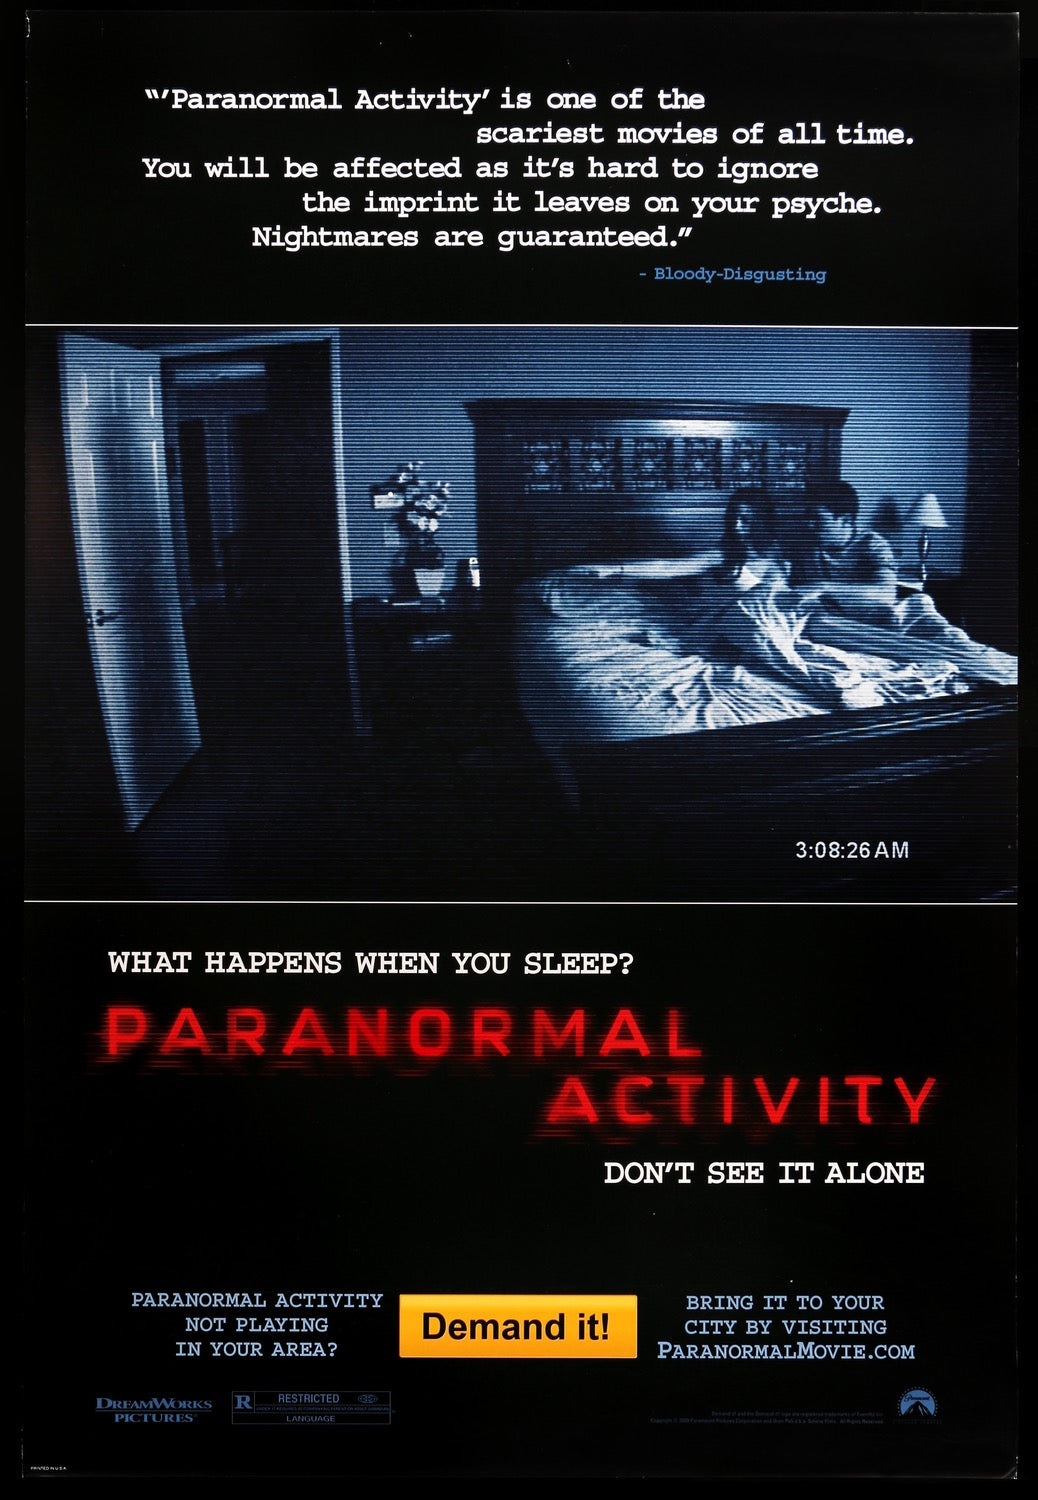 Paranormal Activity (2007) original movie poster for sale at Original Film Art